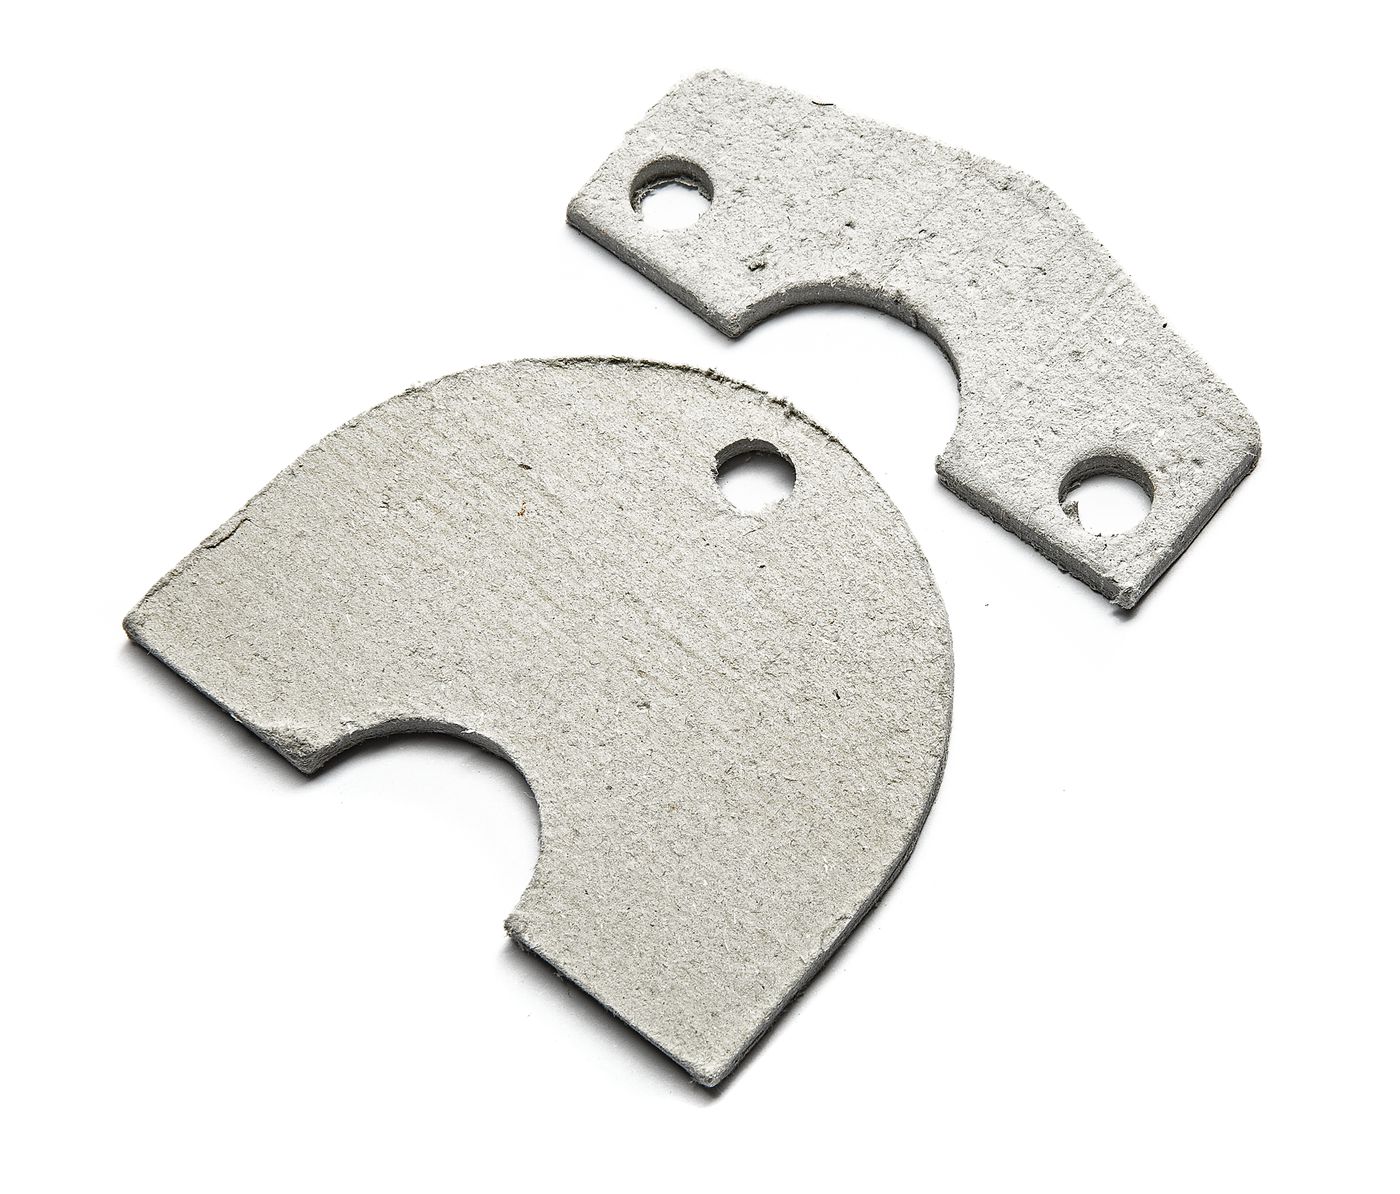 Isolierplatten
Insulator plates
Placca isolante